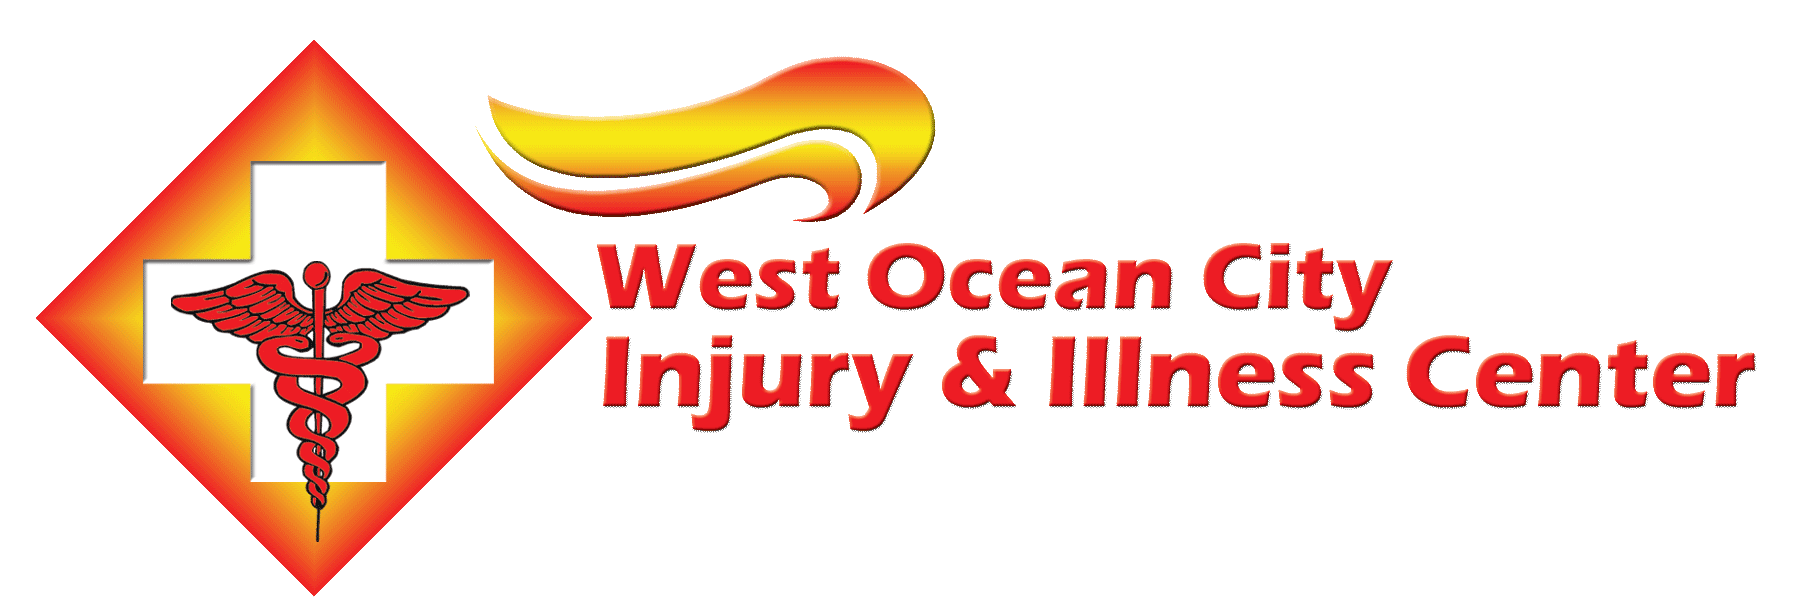 West Ocean City Injury & Illness Center West OC Injury